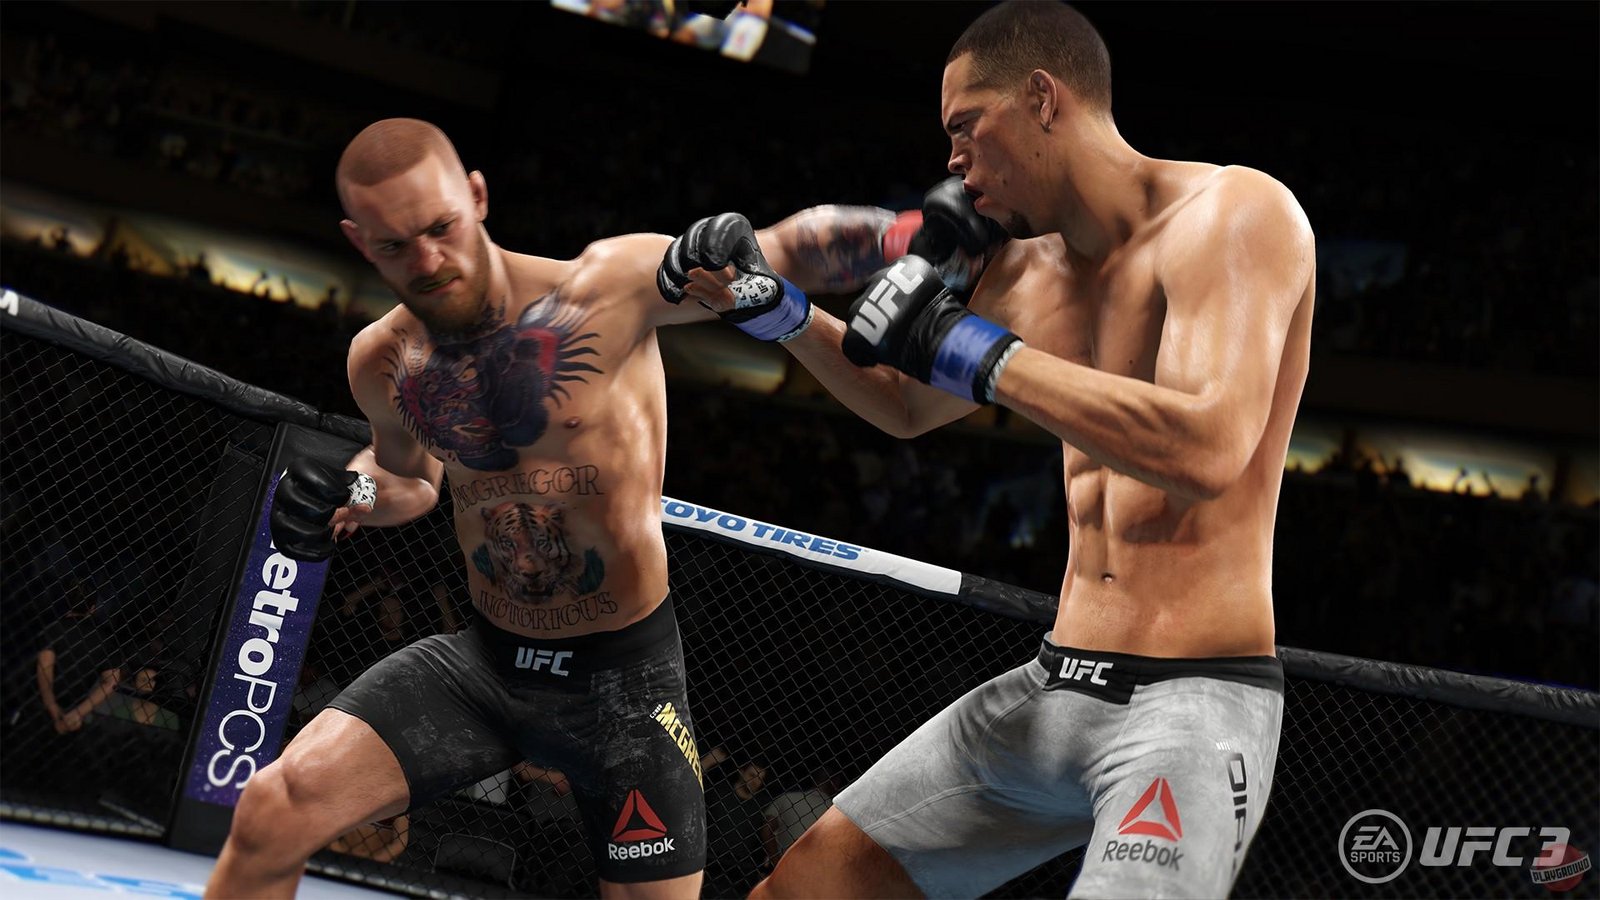 EA Sports UFC 3 - Bruce Lee Bundle